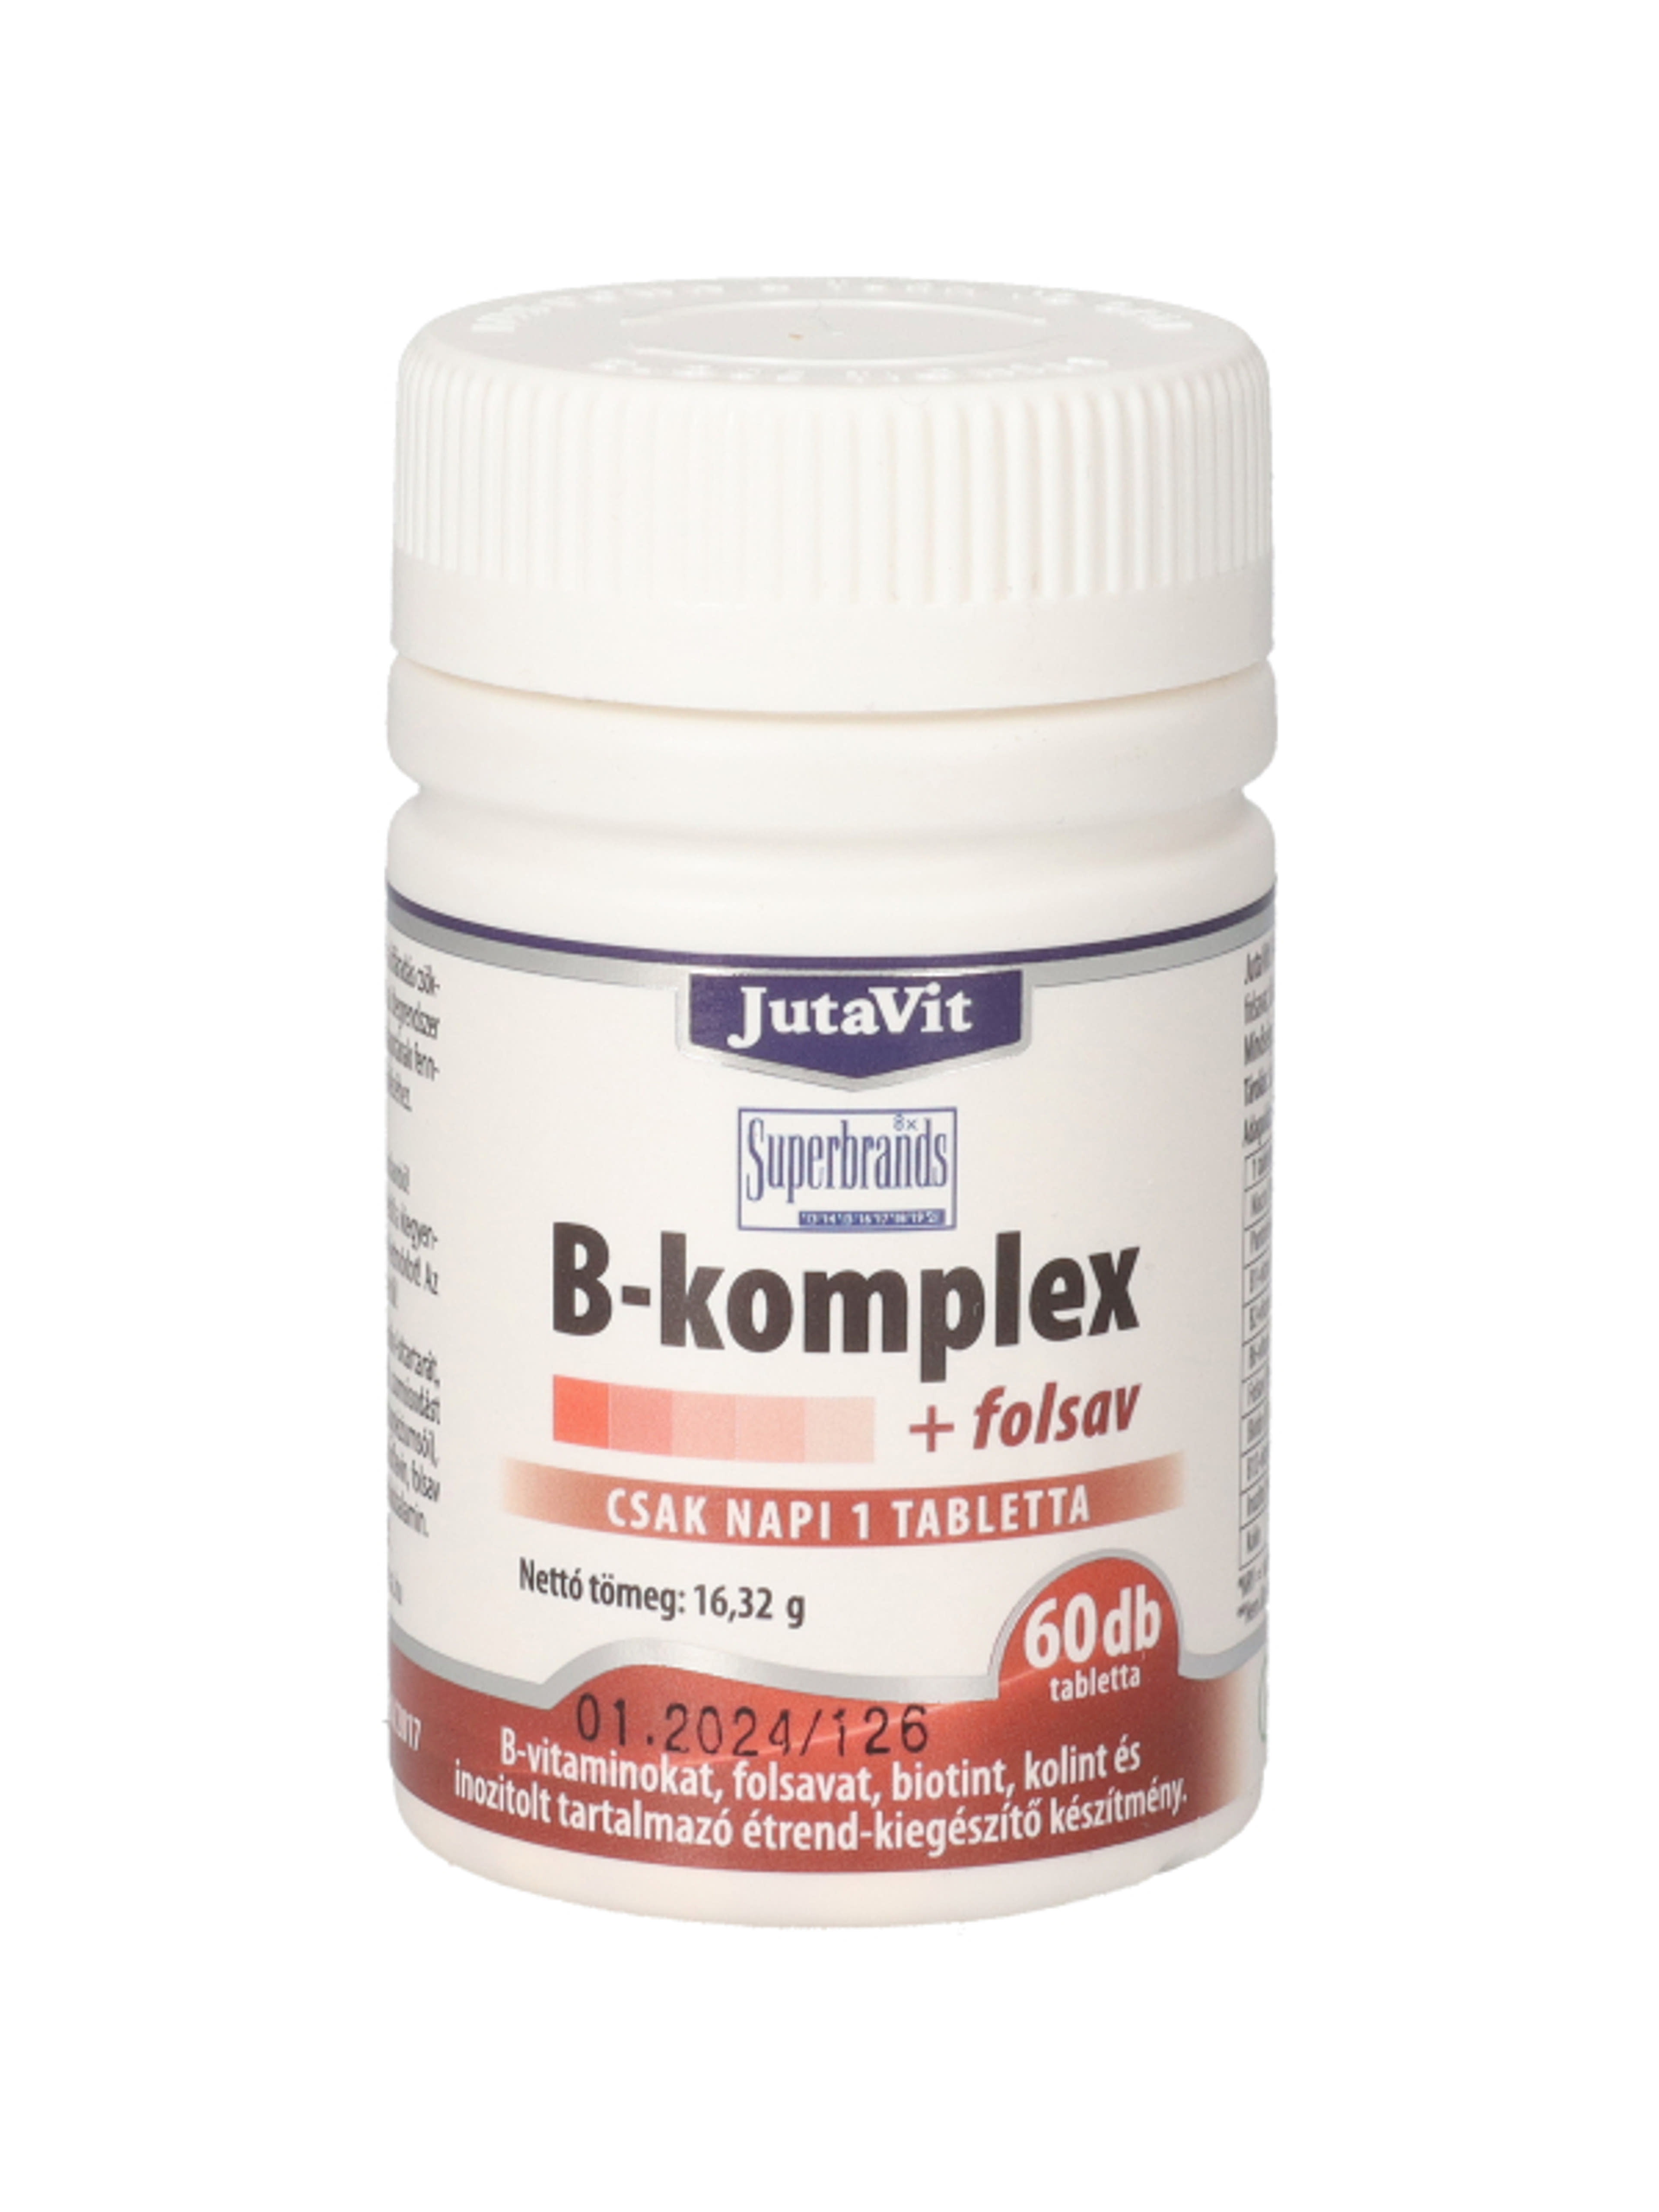 JutaVit B-komplex + folsav étrend-kiegészítő tabletta - 60 db